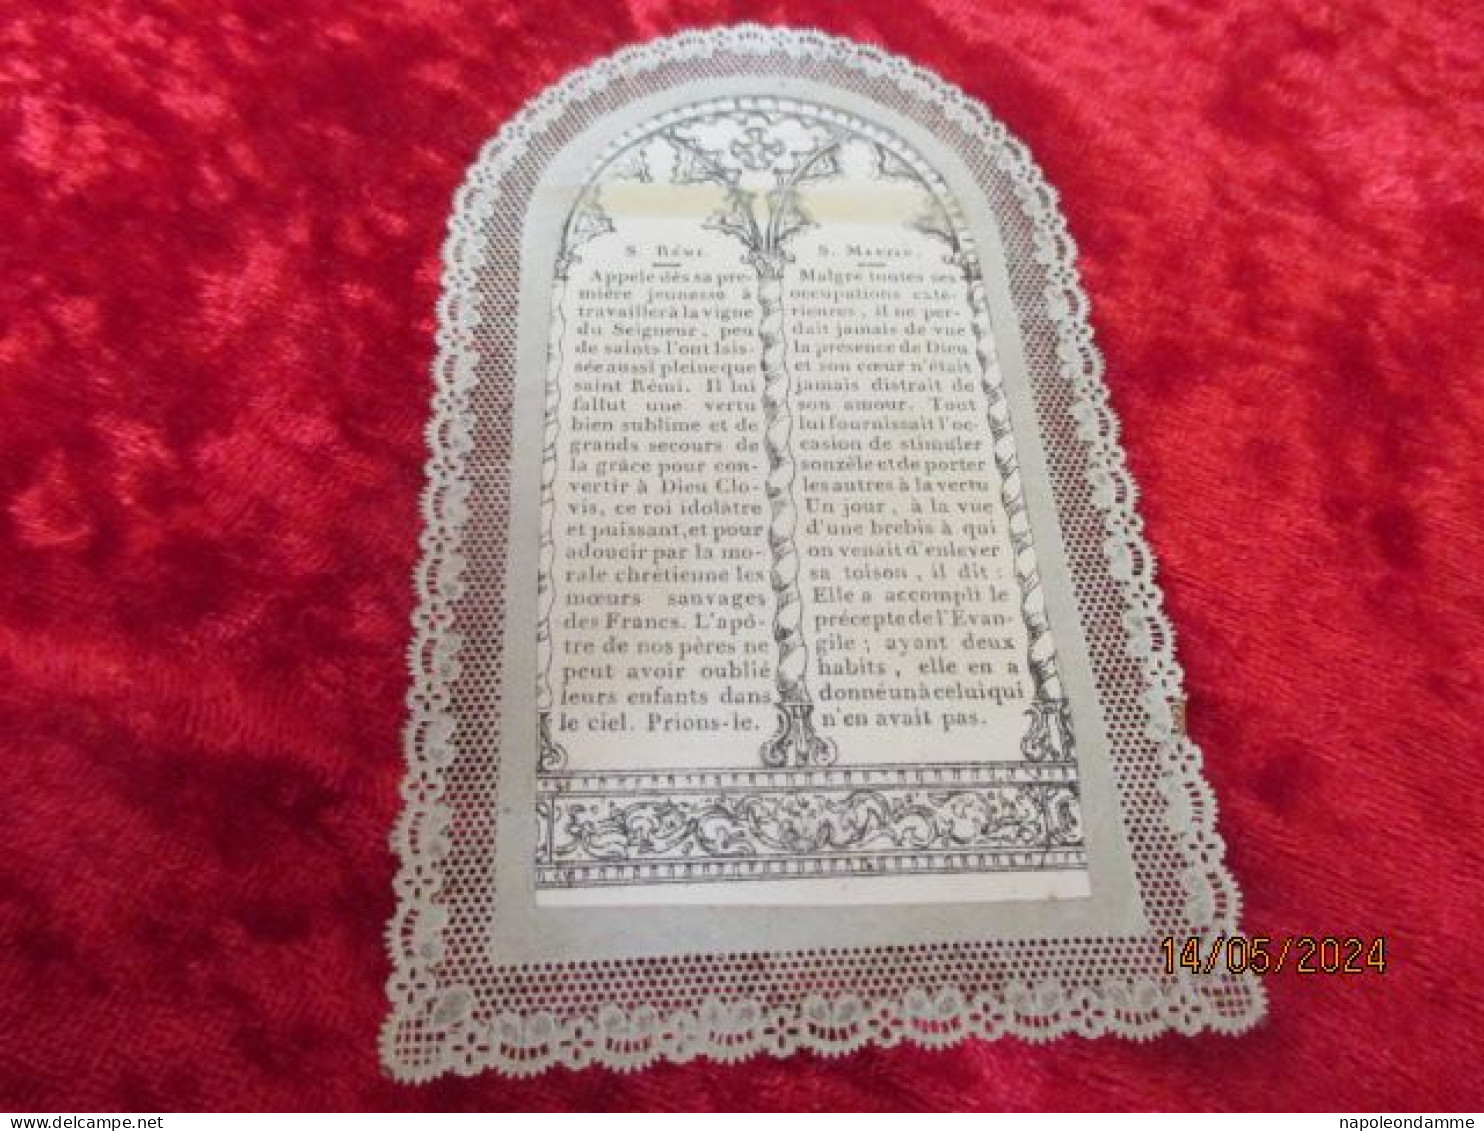 Holy Card Lace,kanten Prentje, Santino, St Martin St Remi, - Devotion Images